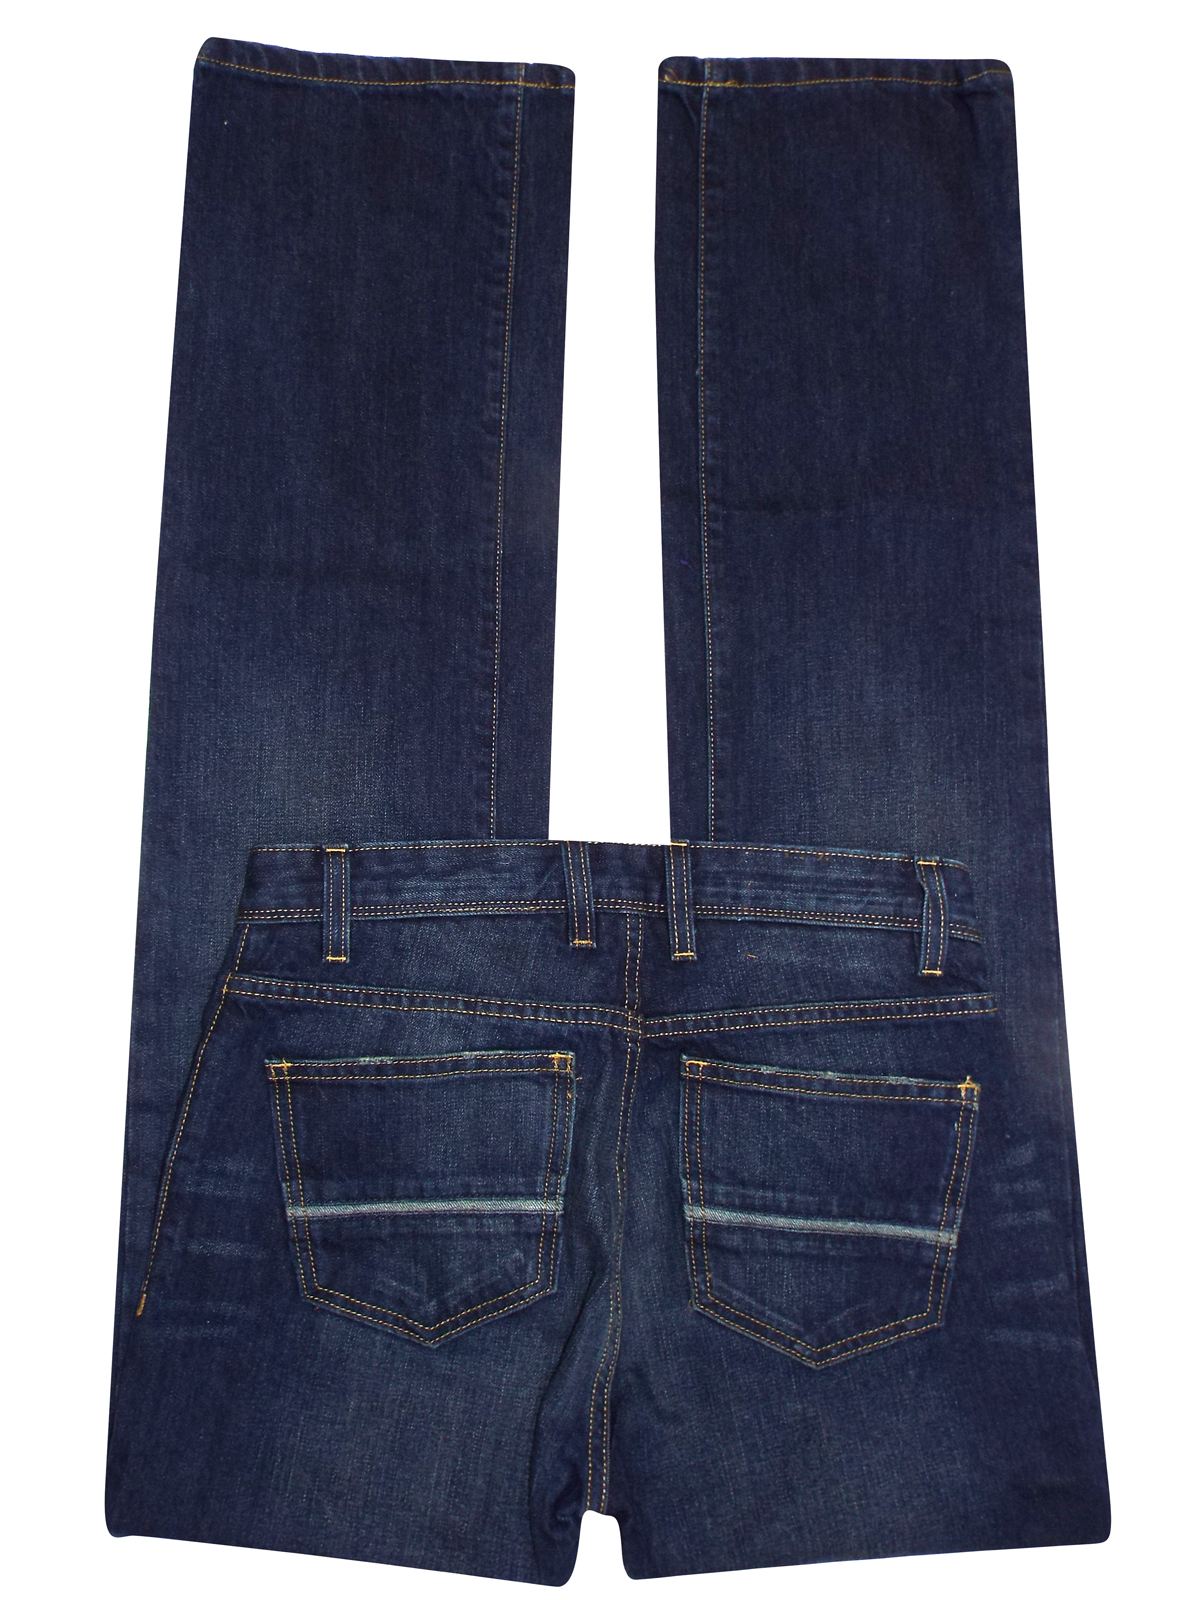 Marks and Spencer - - M&5 INDIGO Pure Cotton Straight Leg Denim Jeans - Waist Size 30 to 40 